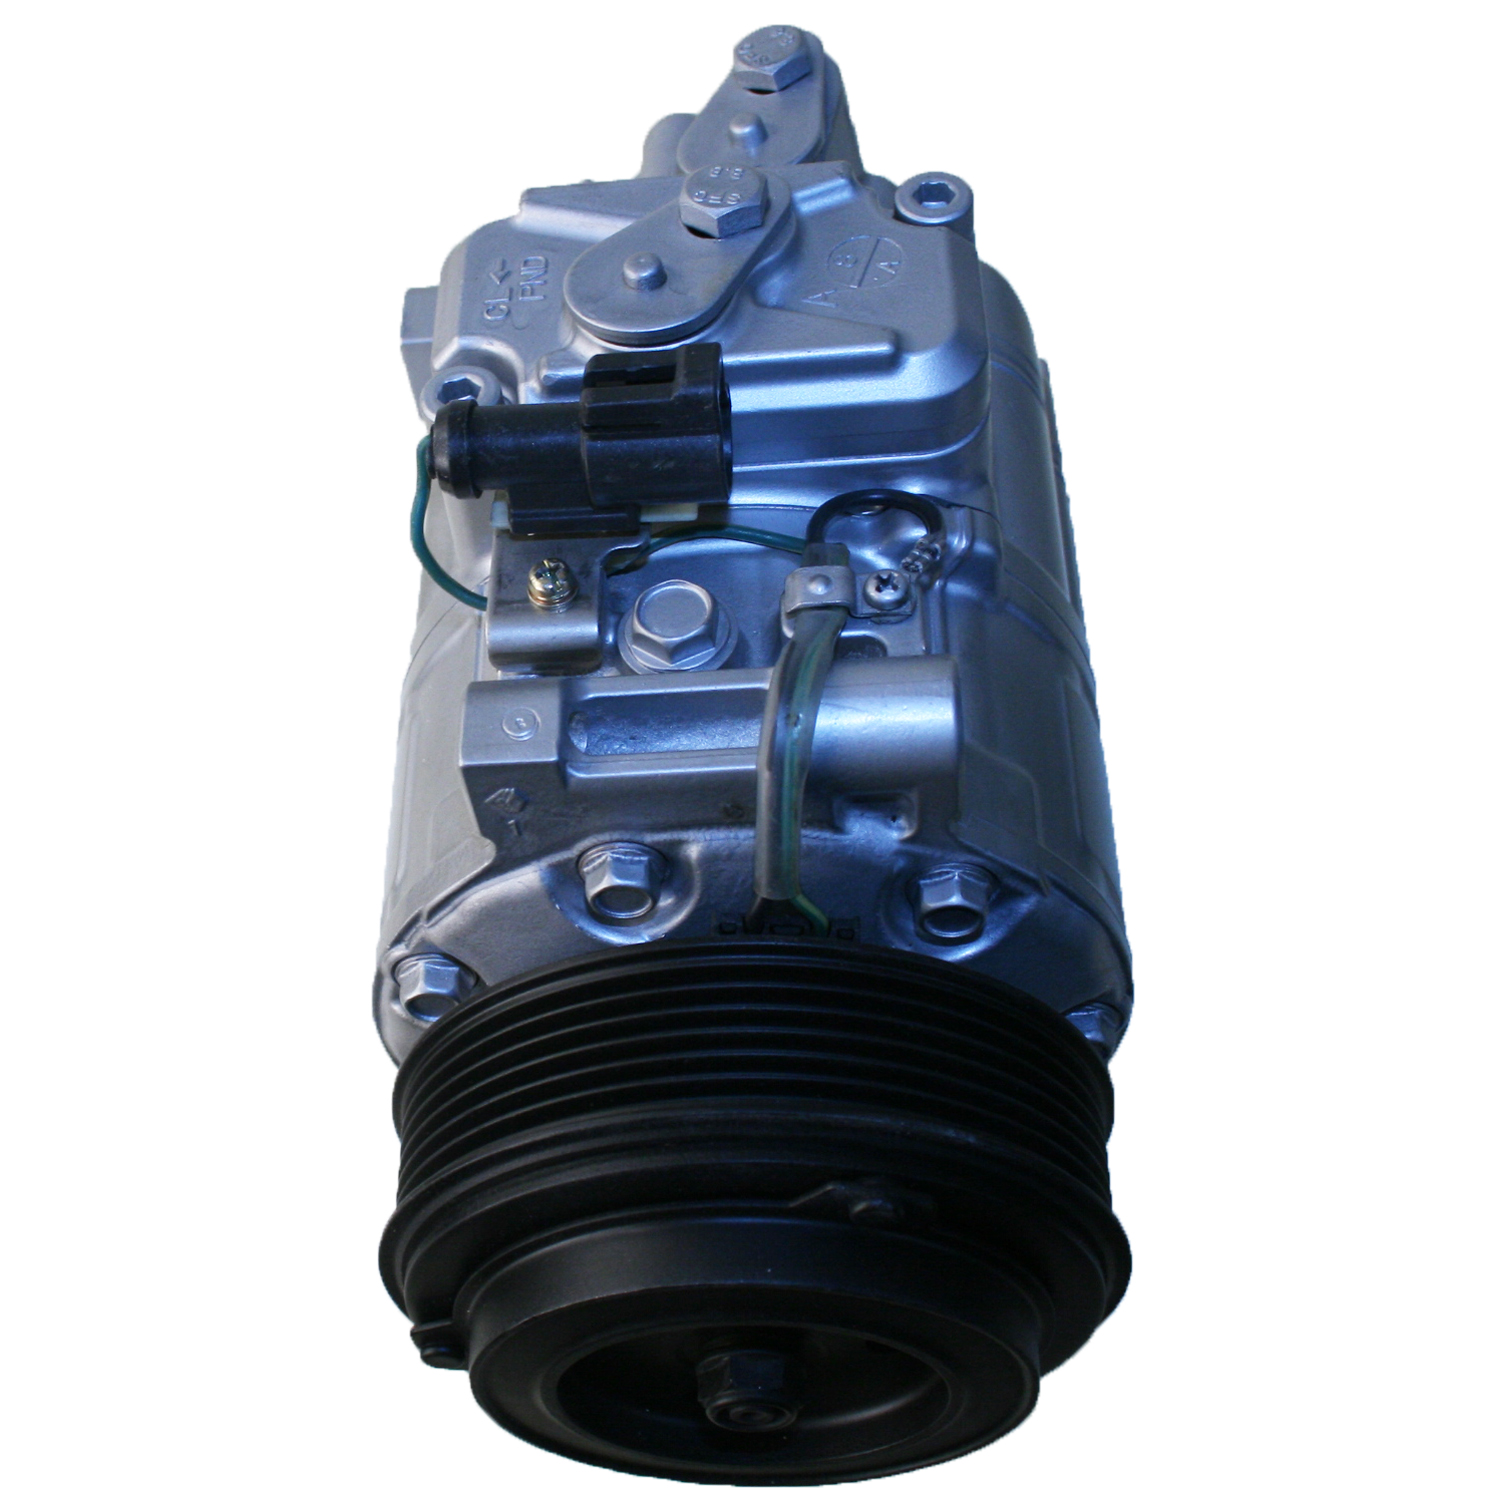 TCW Compressor 41254.6T1 Remanufactured Product Image field_60b6a13a6e67c